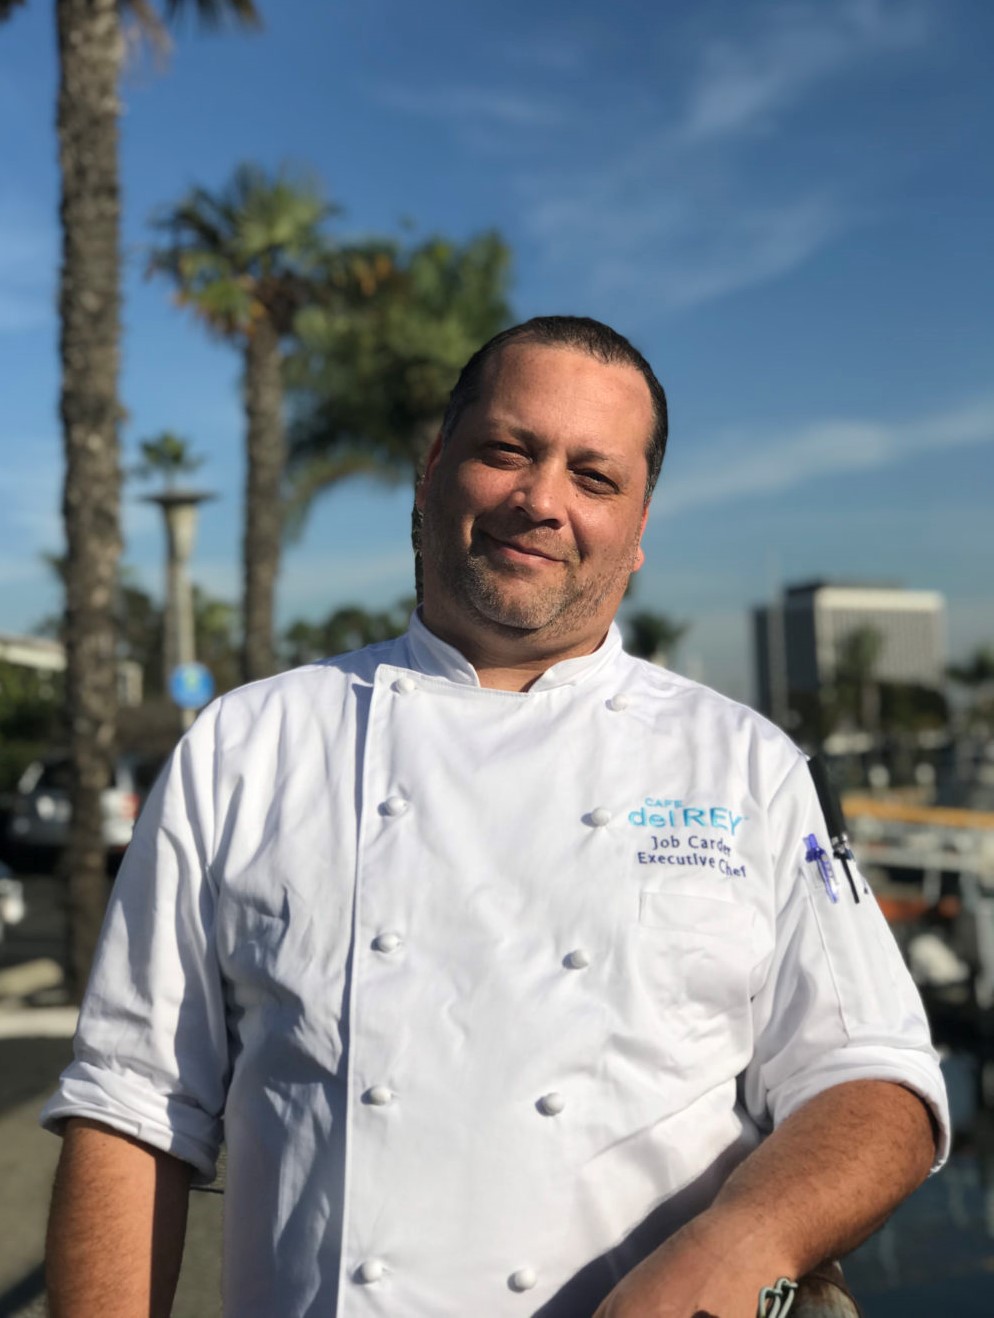 Cafe del Rey Executive Chef Job Carder